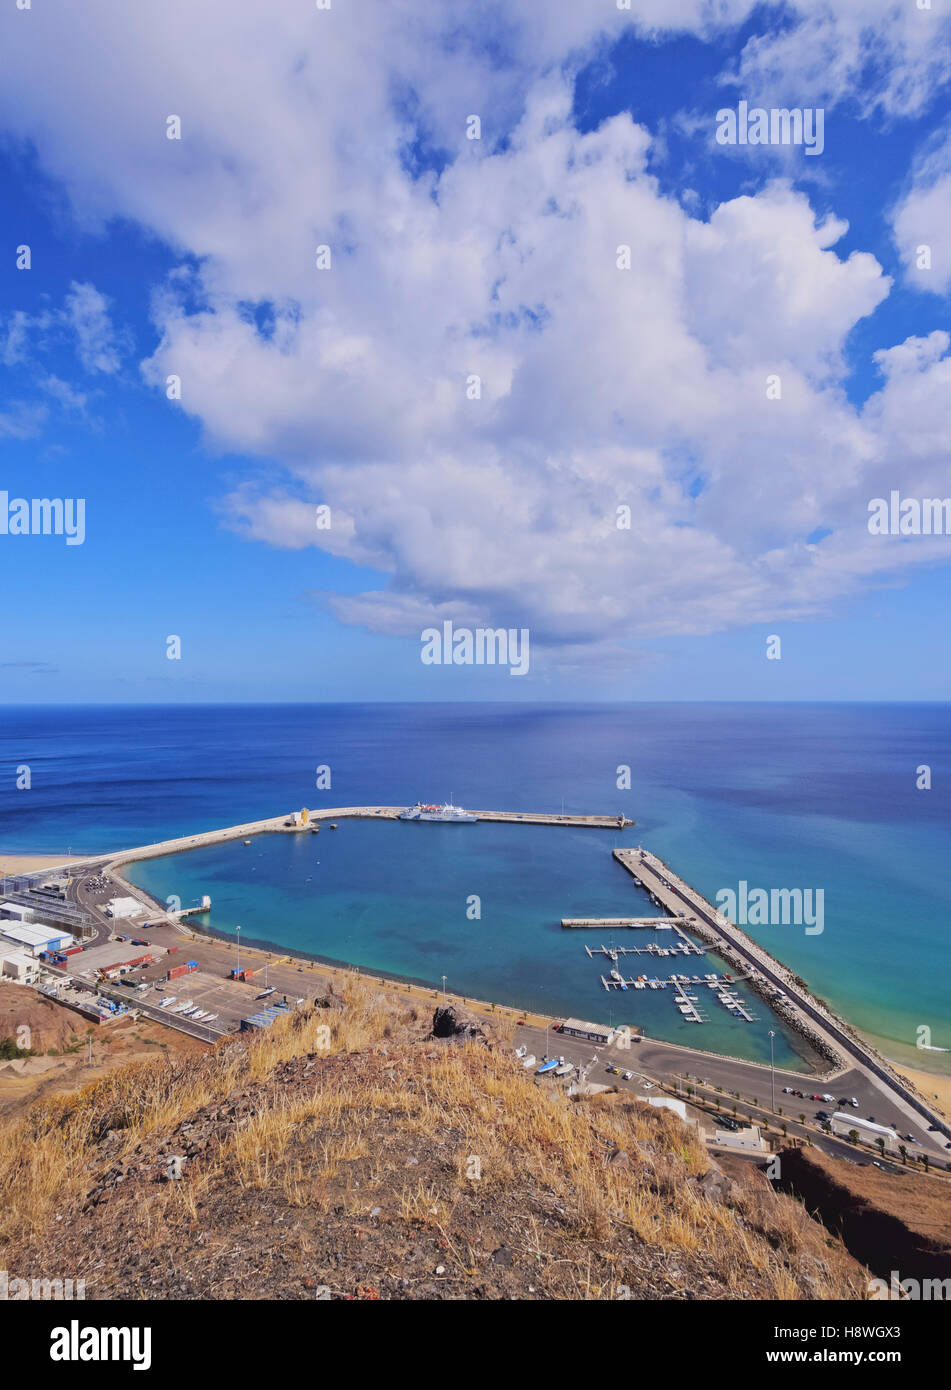 Marina de porto hi-res stock photography and images - Alamy